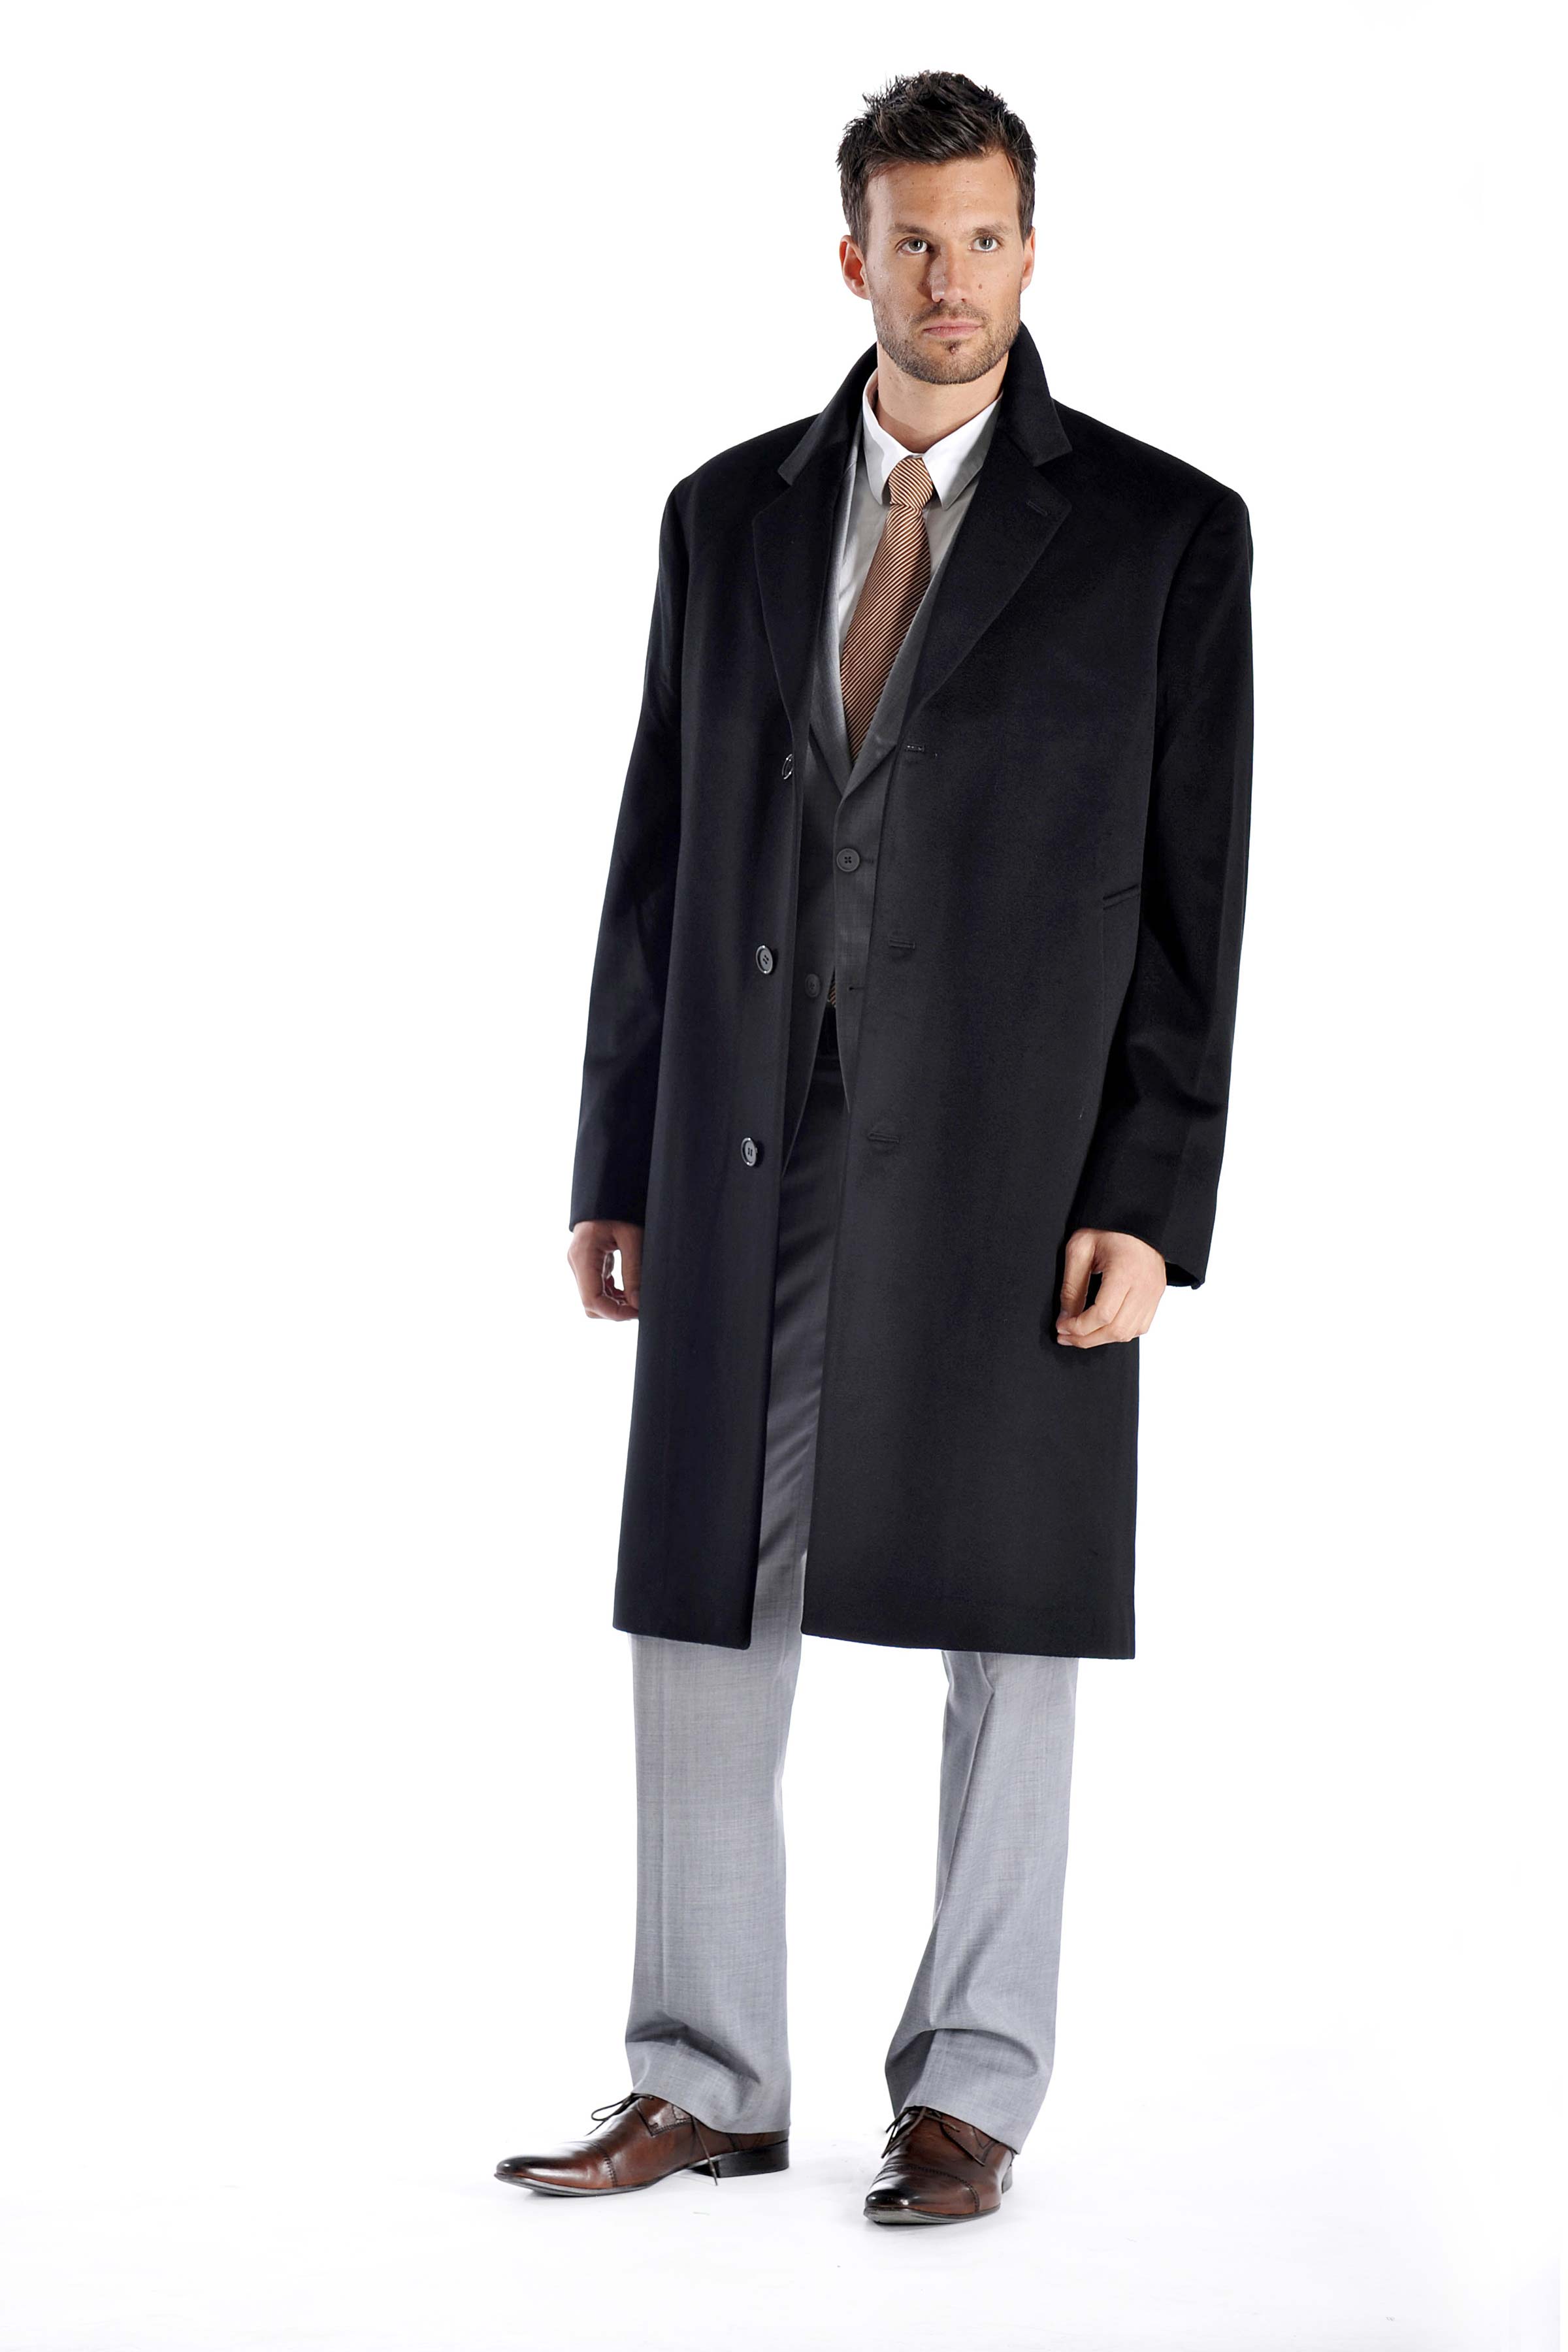 Pure Cashmere Knee Length Coat for Men (Black, 38)